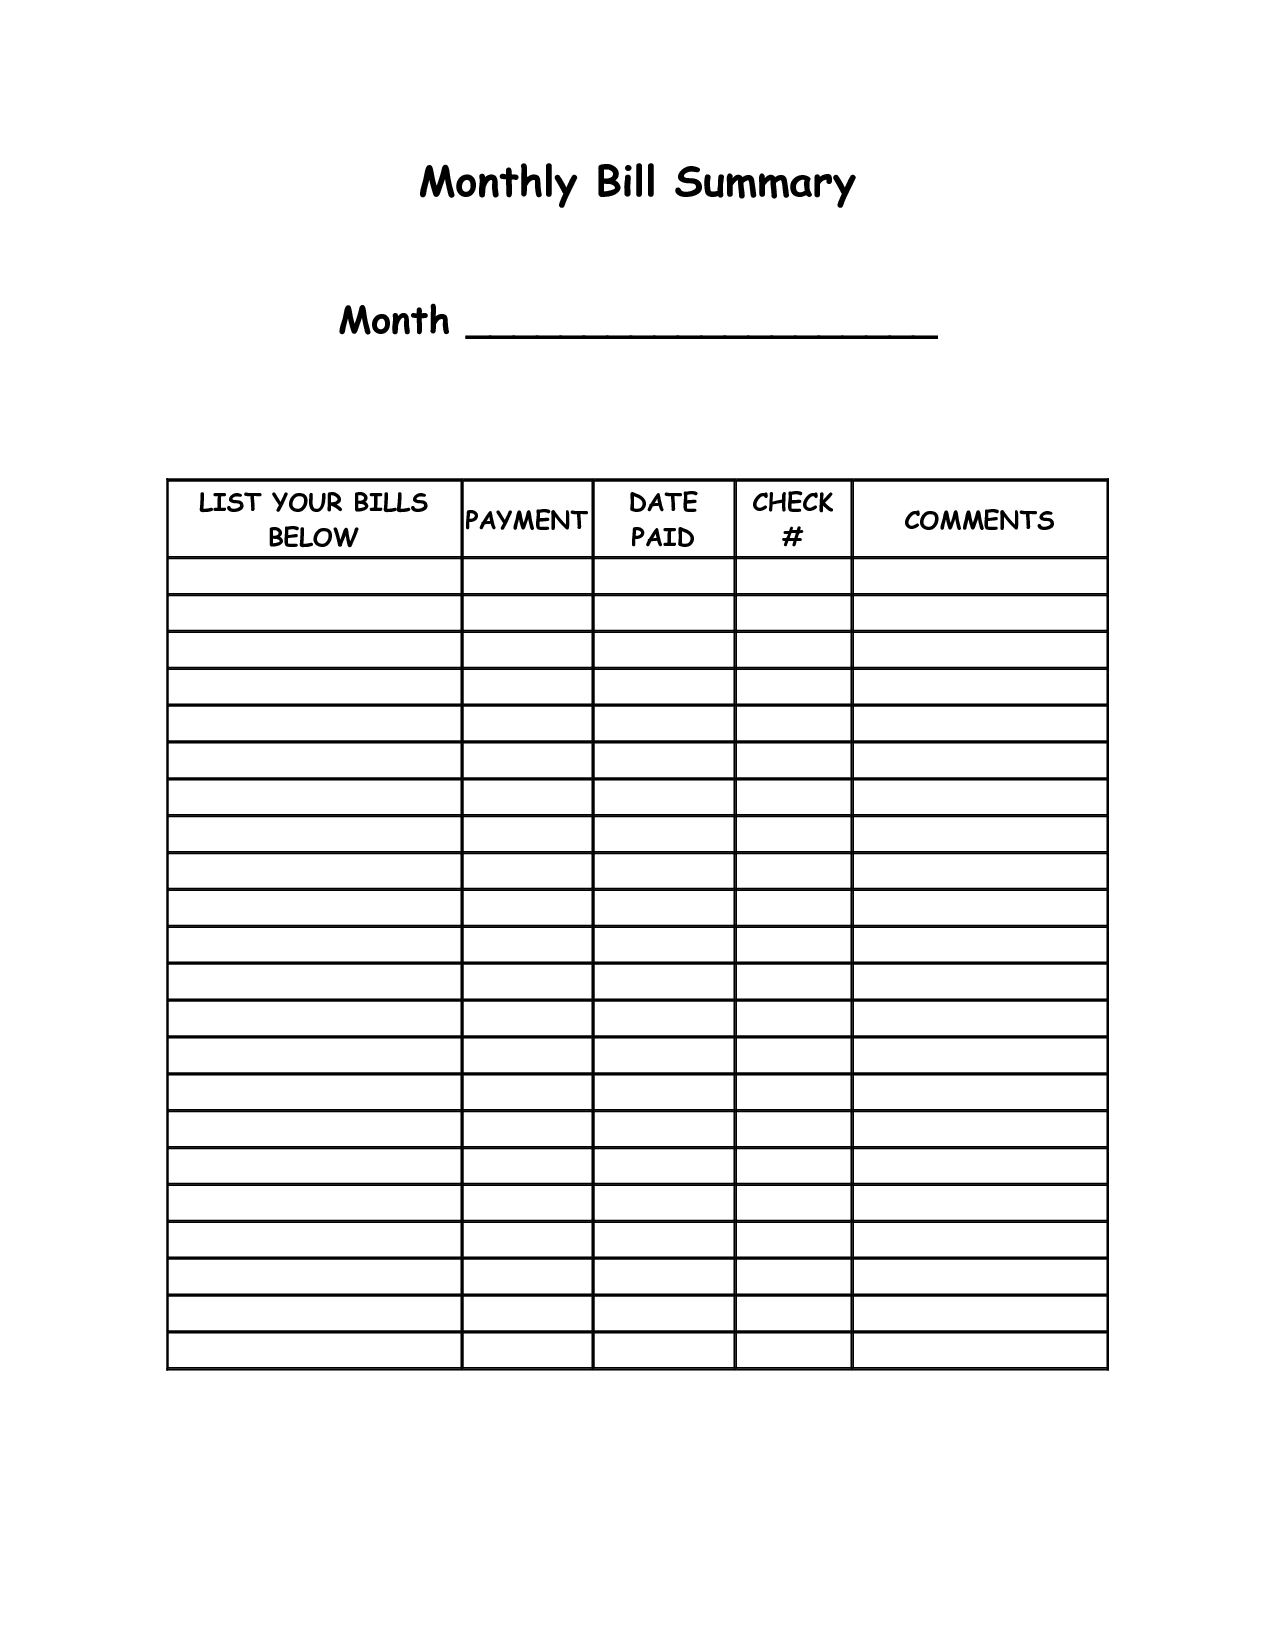 Monthly Bill Summary Doc | Organizing Monthly Bills, Bill-Monthly Bill Schedule Template